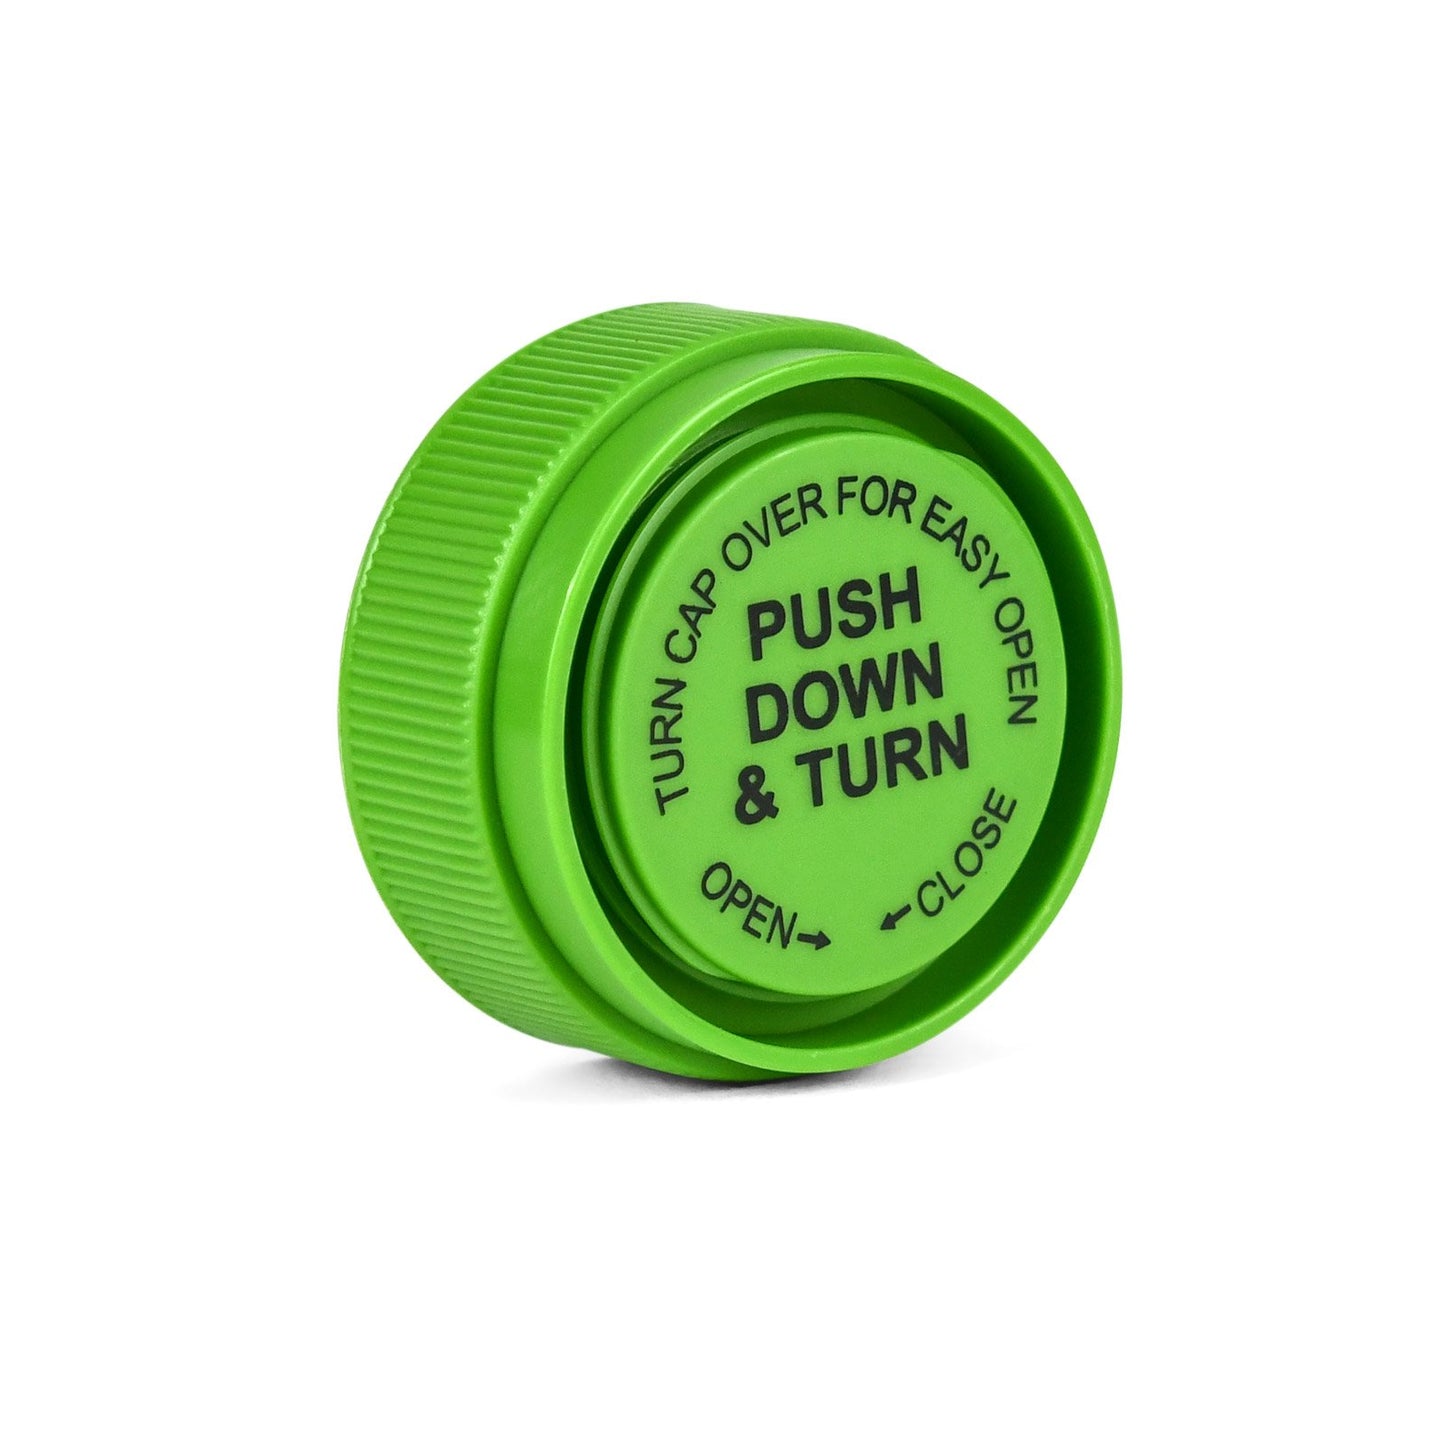 8 Dram Push Down & Turn Cap Opaque Green - 410 COUNT